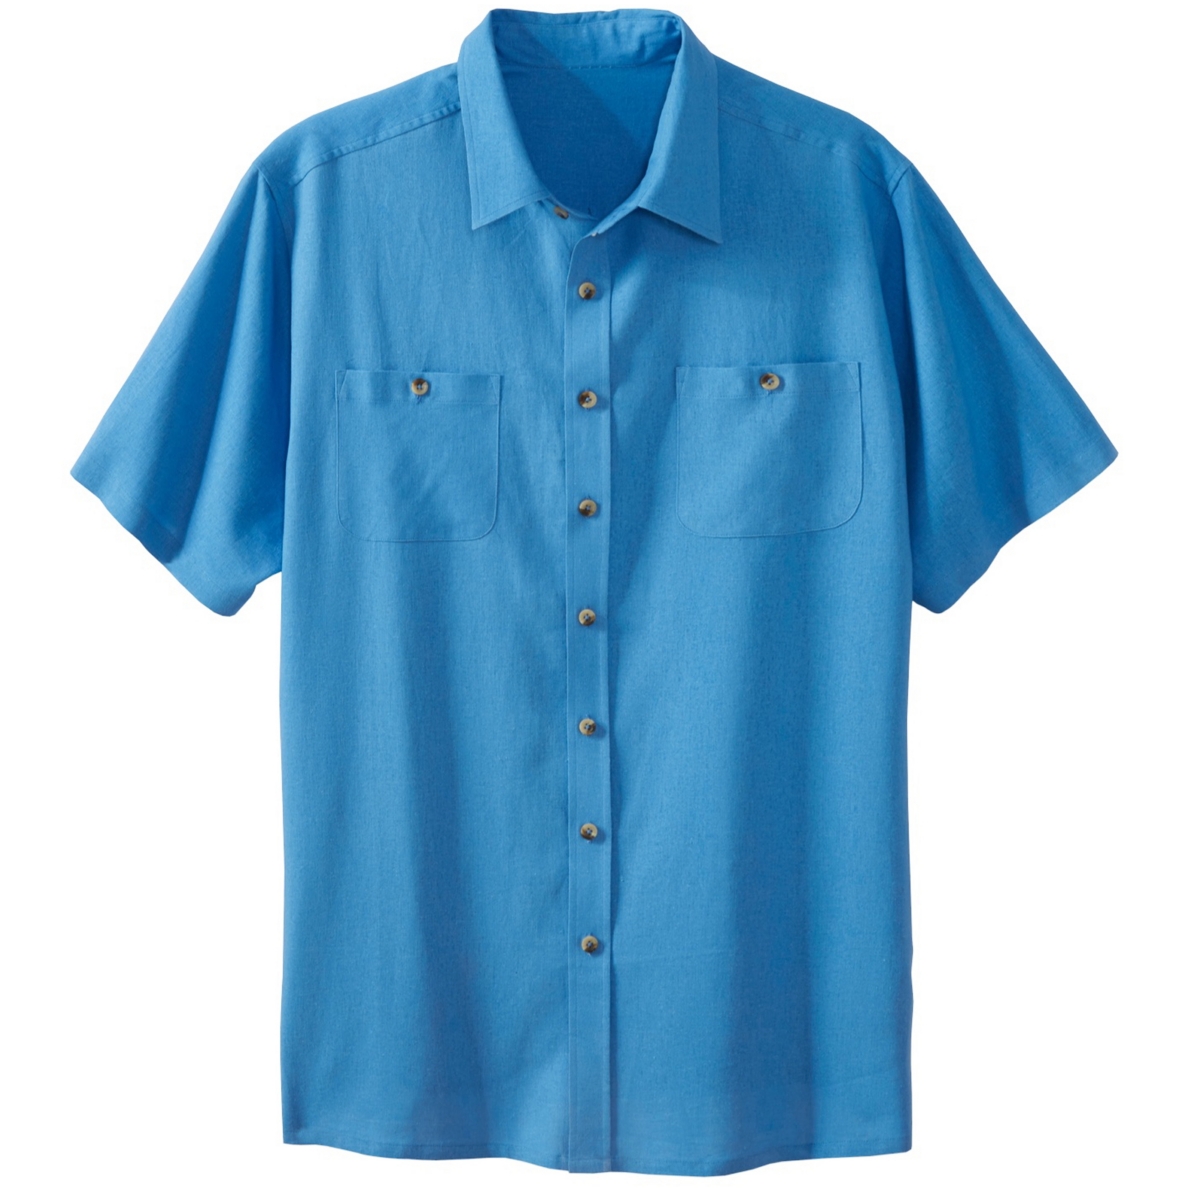 Big & Tall Short-Sleeve Linen Shirt - Royal blue floral